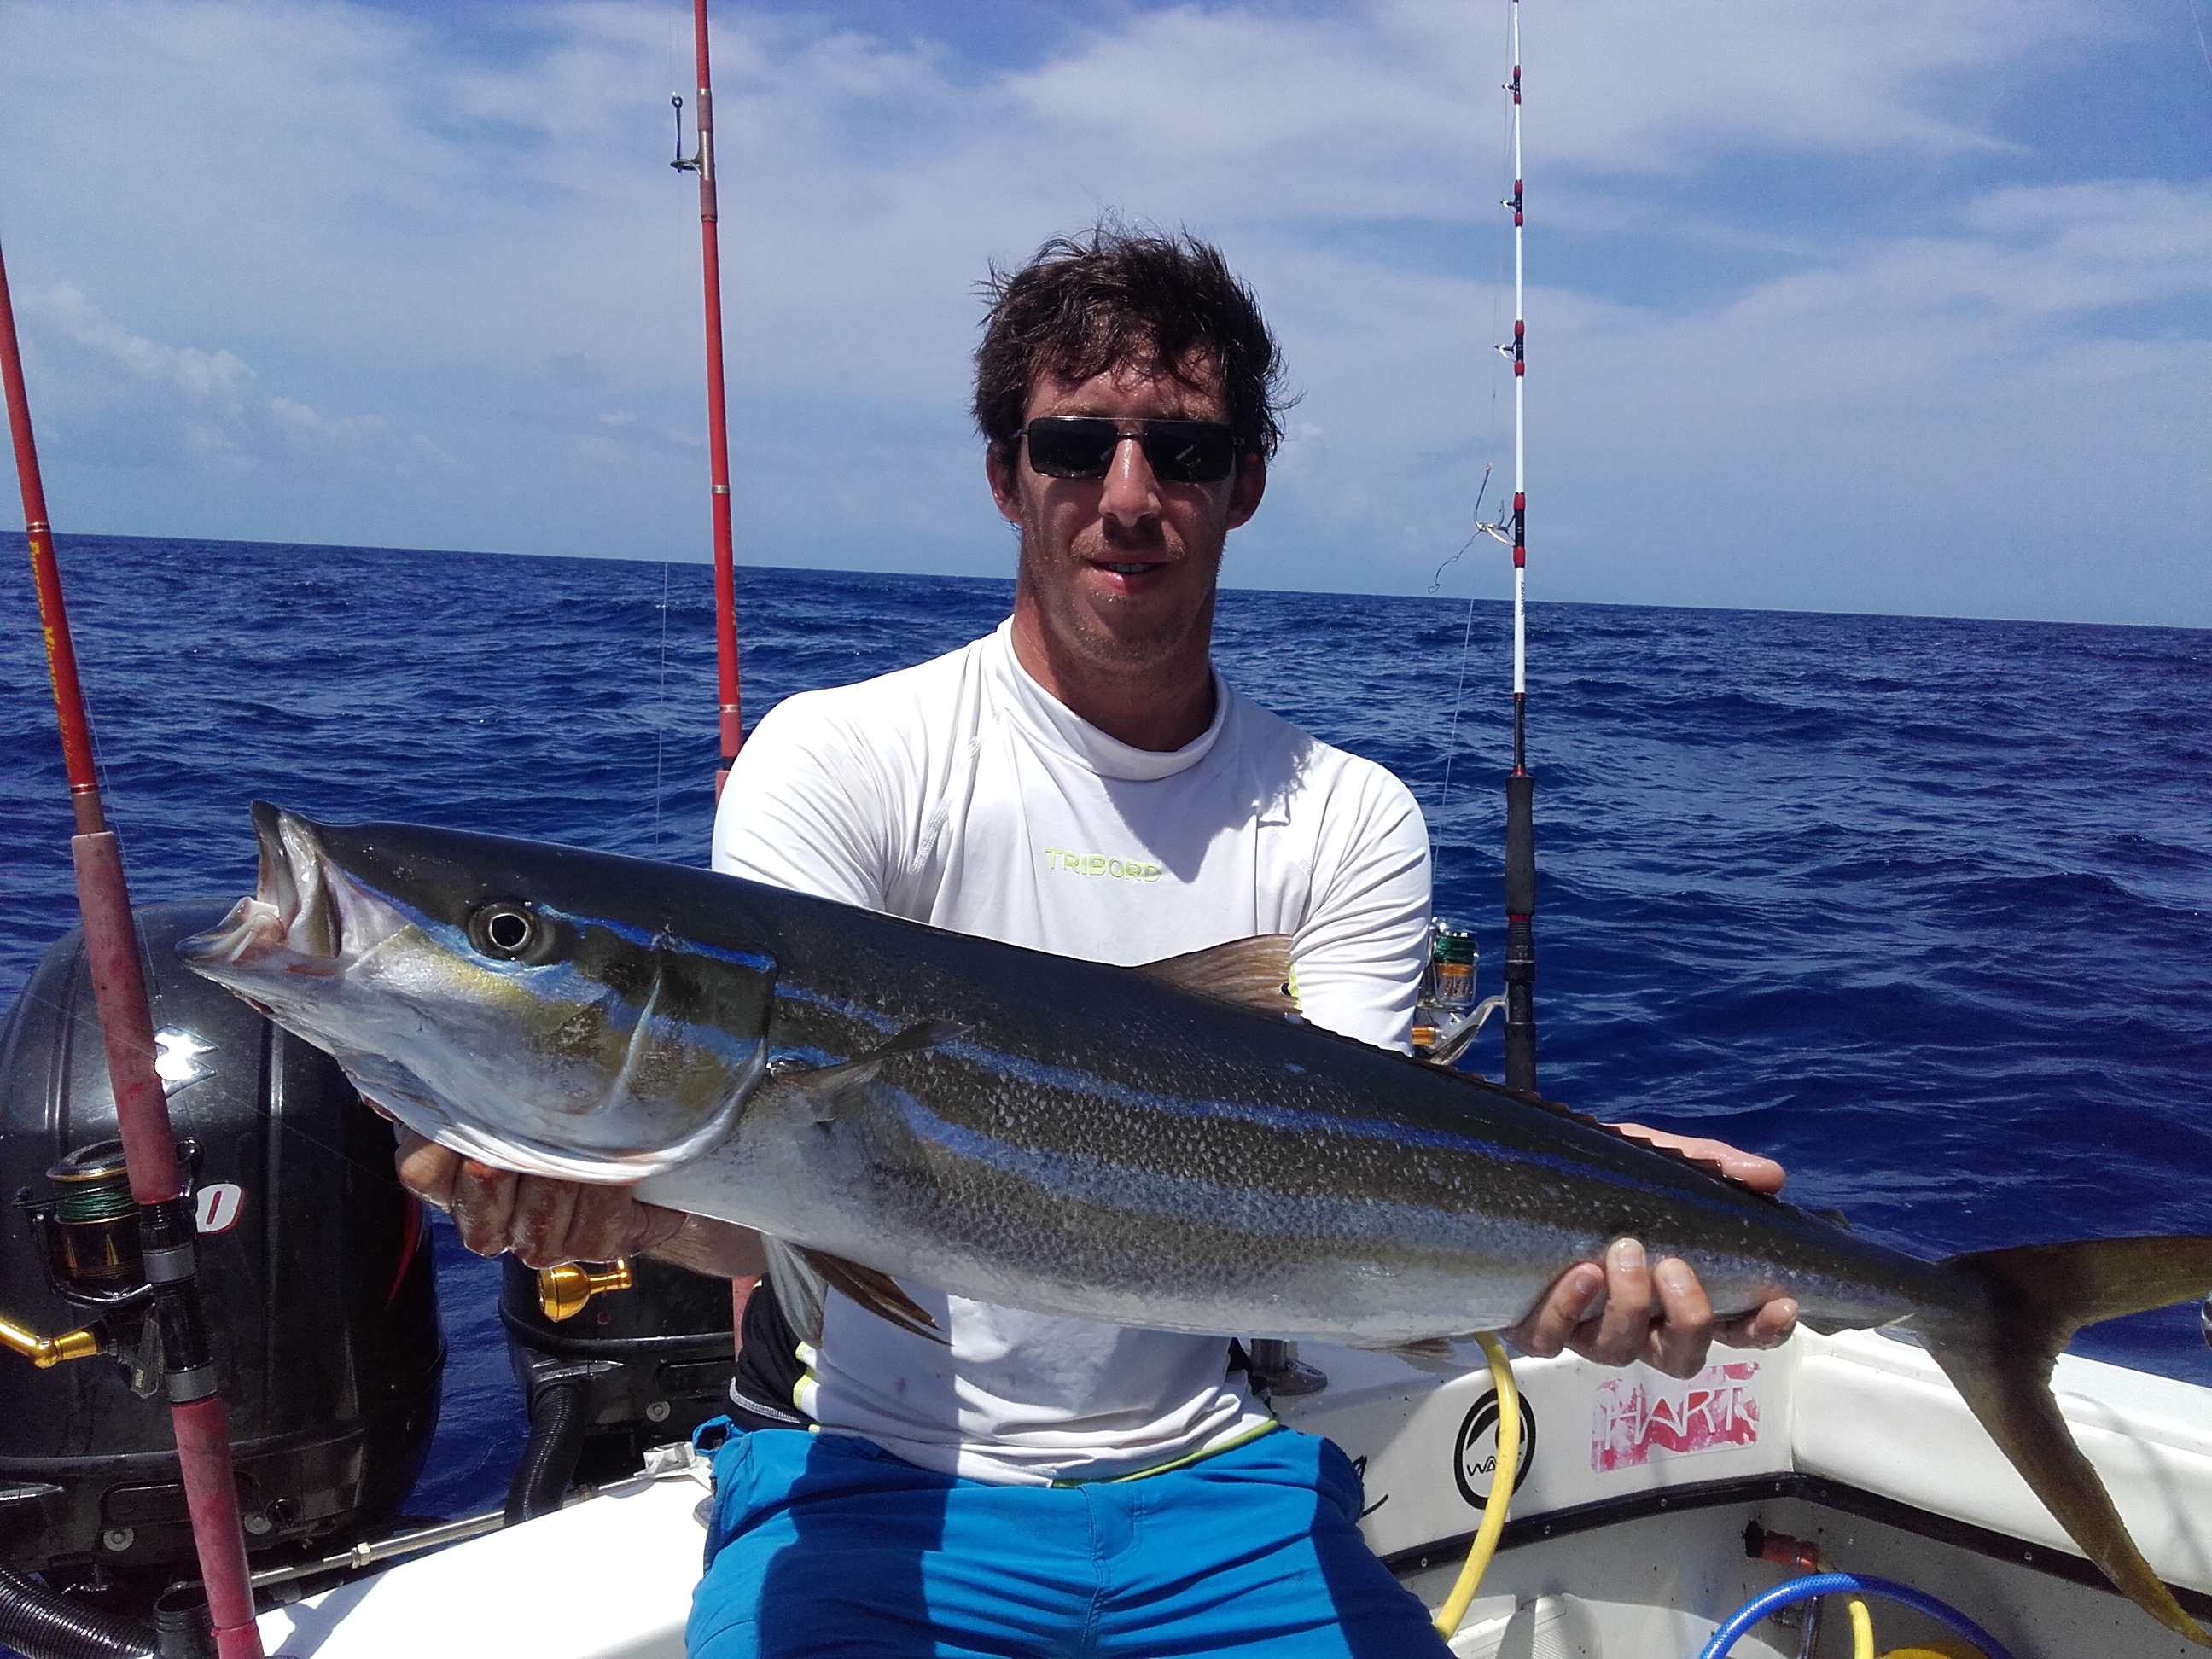 Le colas batard – Julien BROSSEL, Guide de pêche sportive en Guadeloupe